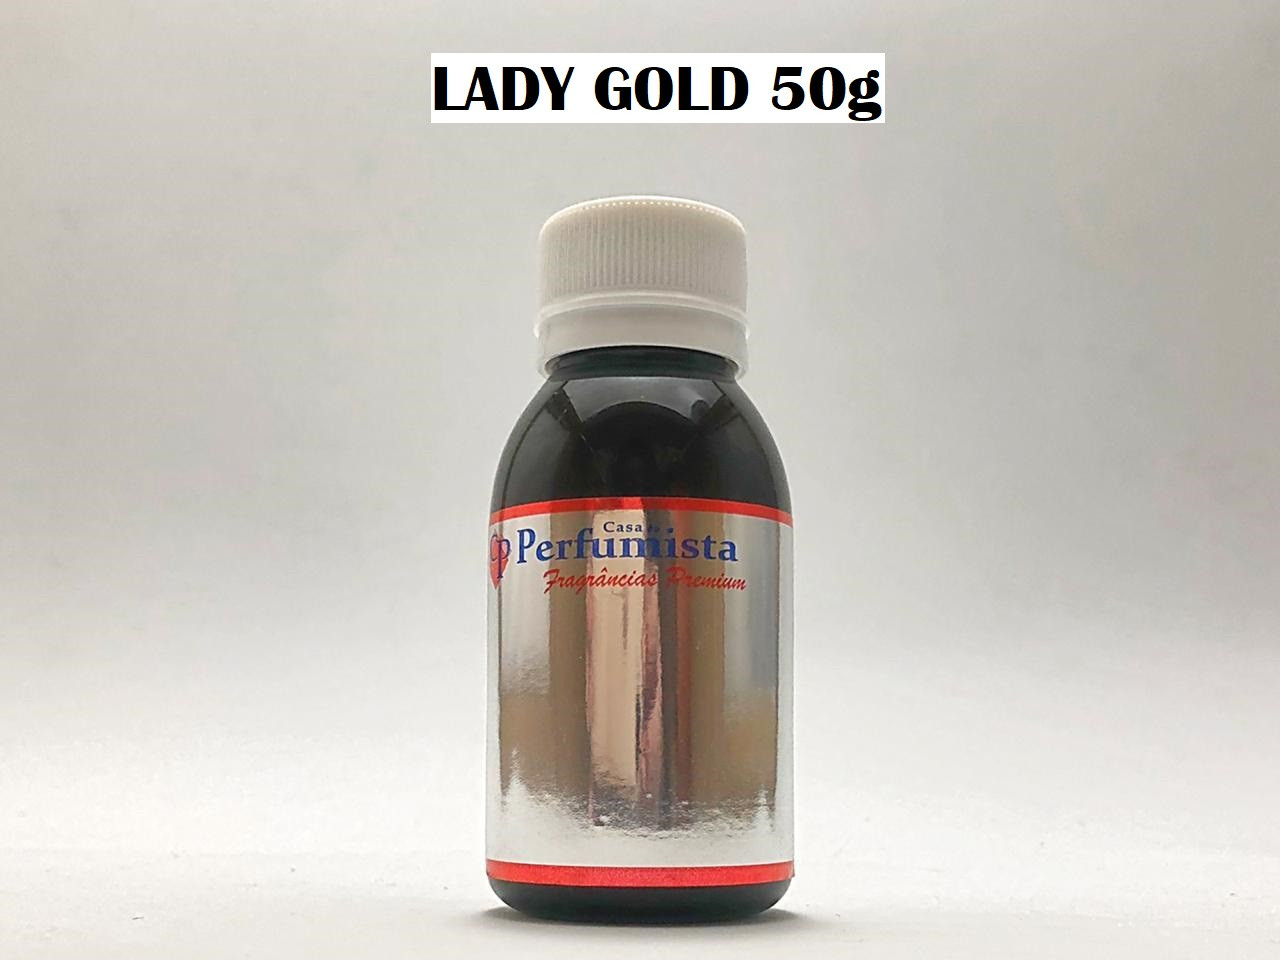 LADY GOLD 50g - Inspiração: Lady Million Feminino 